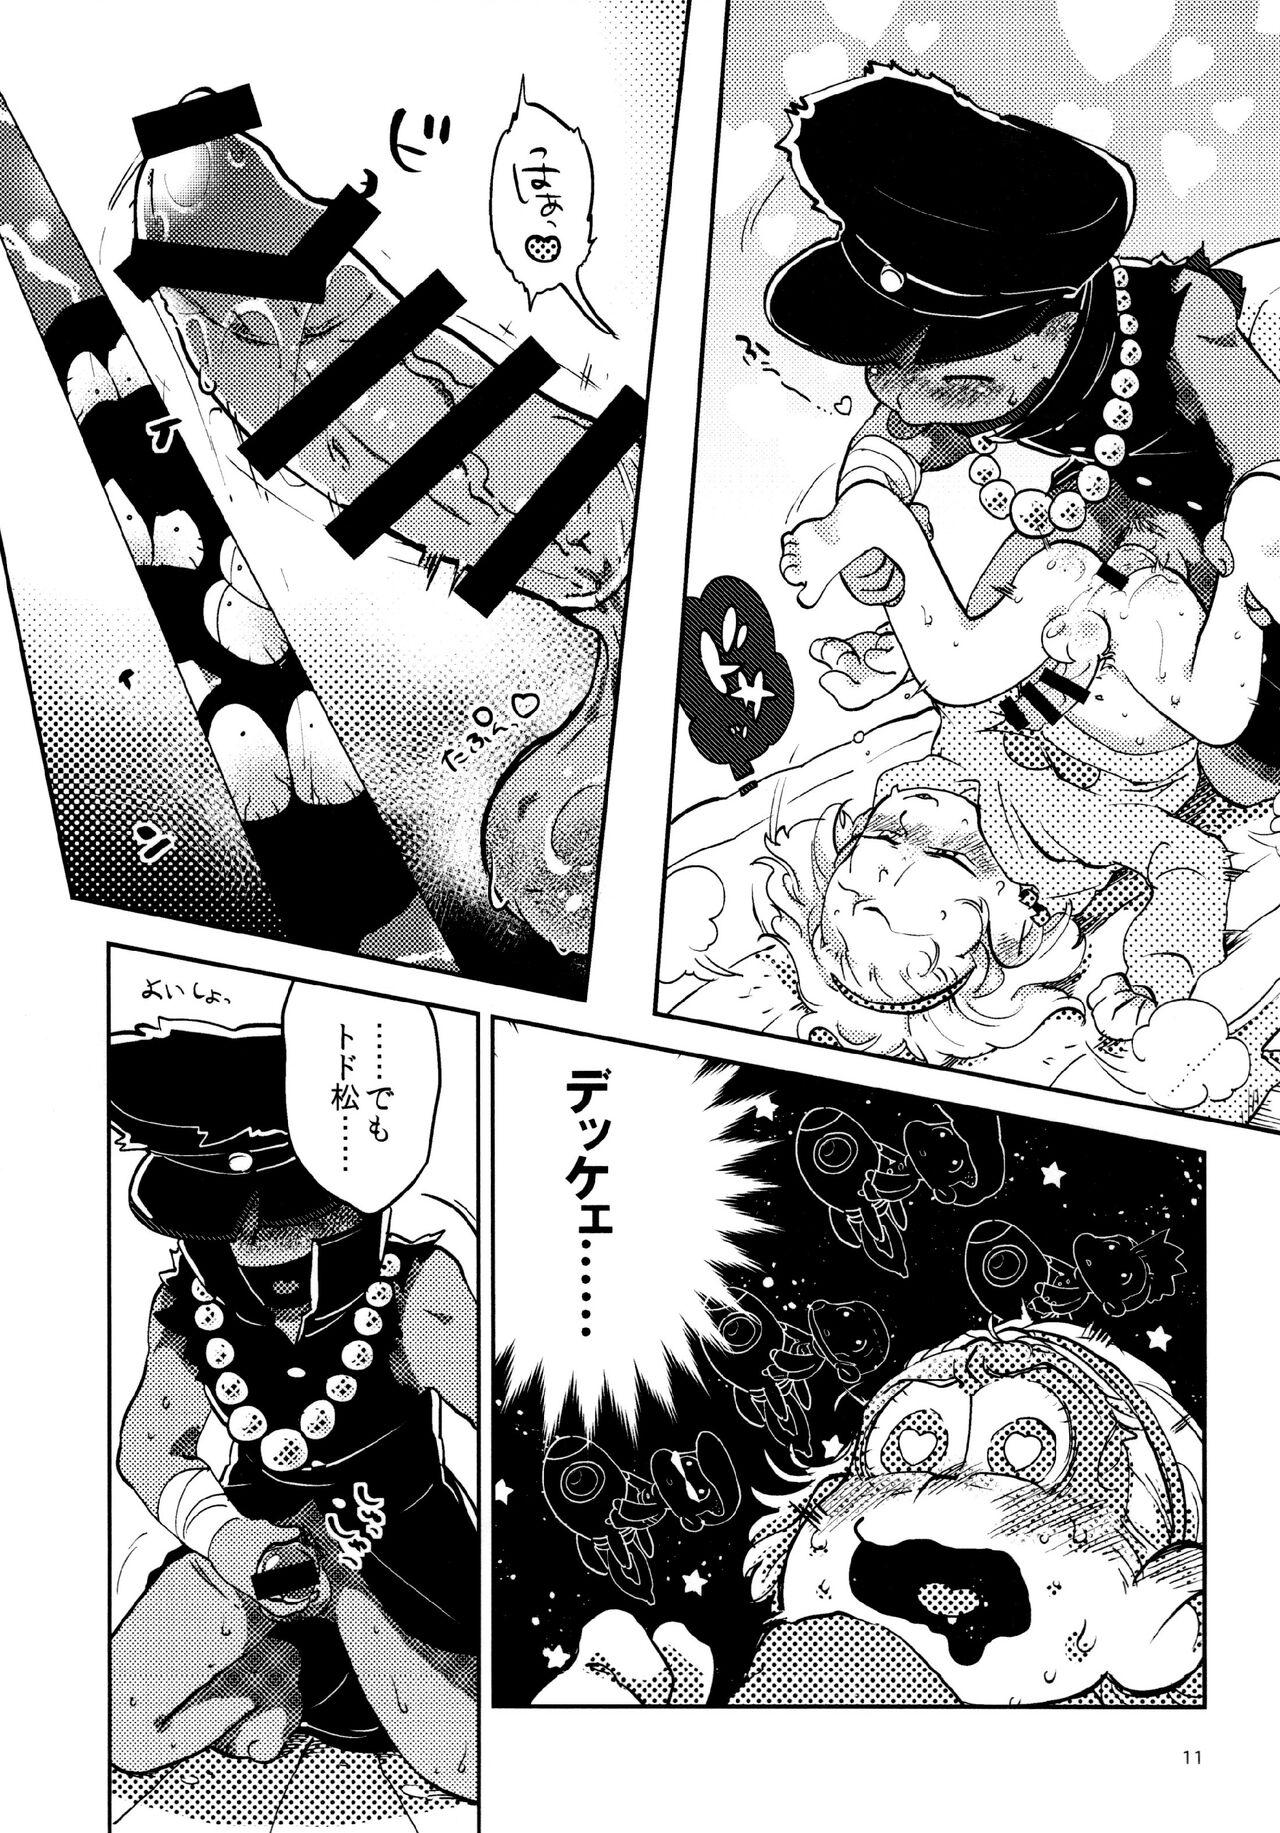 Gay Medical Amaebitamago (gyuunyuu) gaman joutou airabuyuu (Osomatsu-san) - Osomatsu san Parody - Page 11